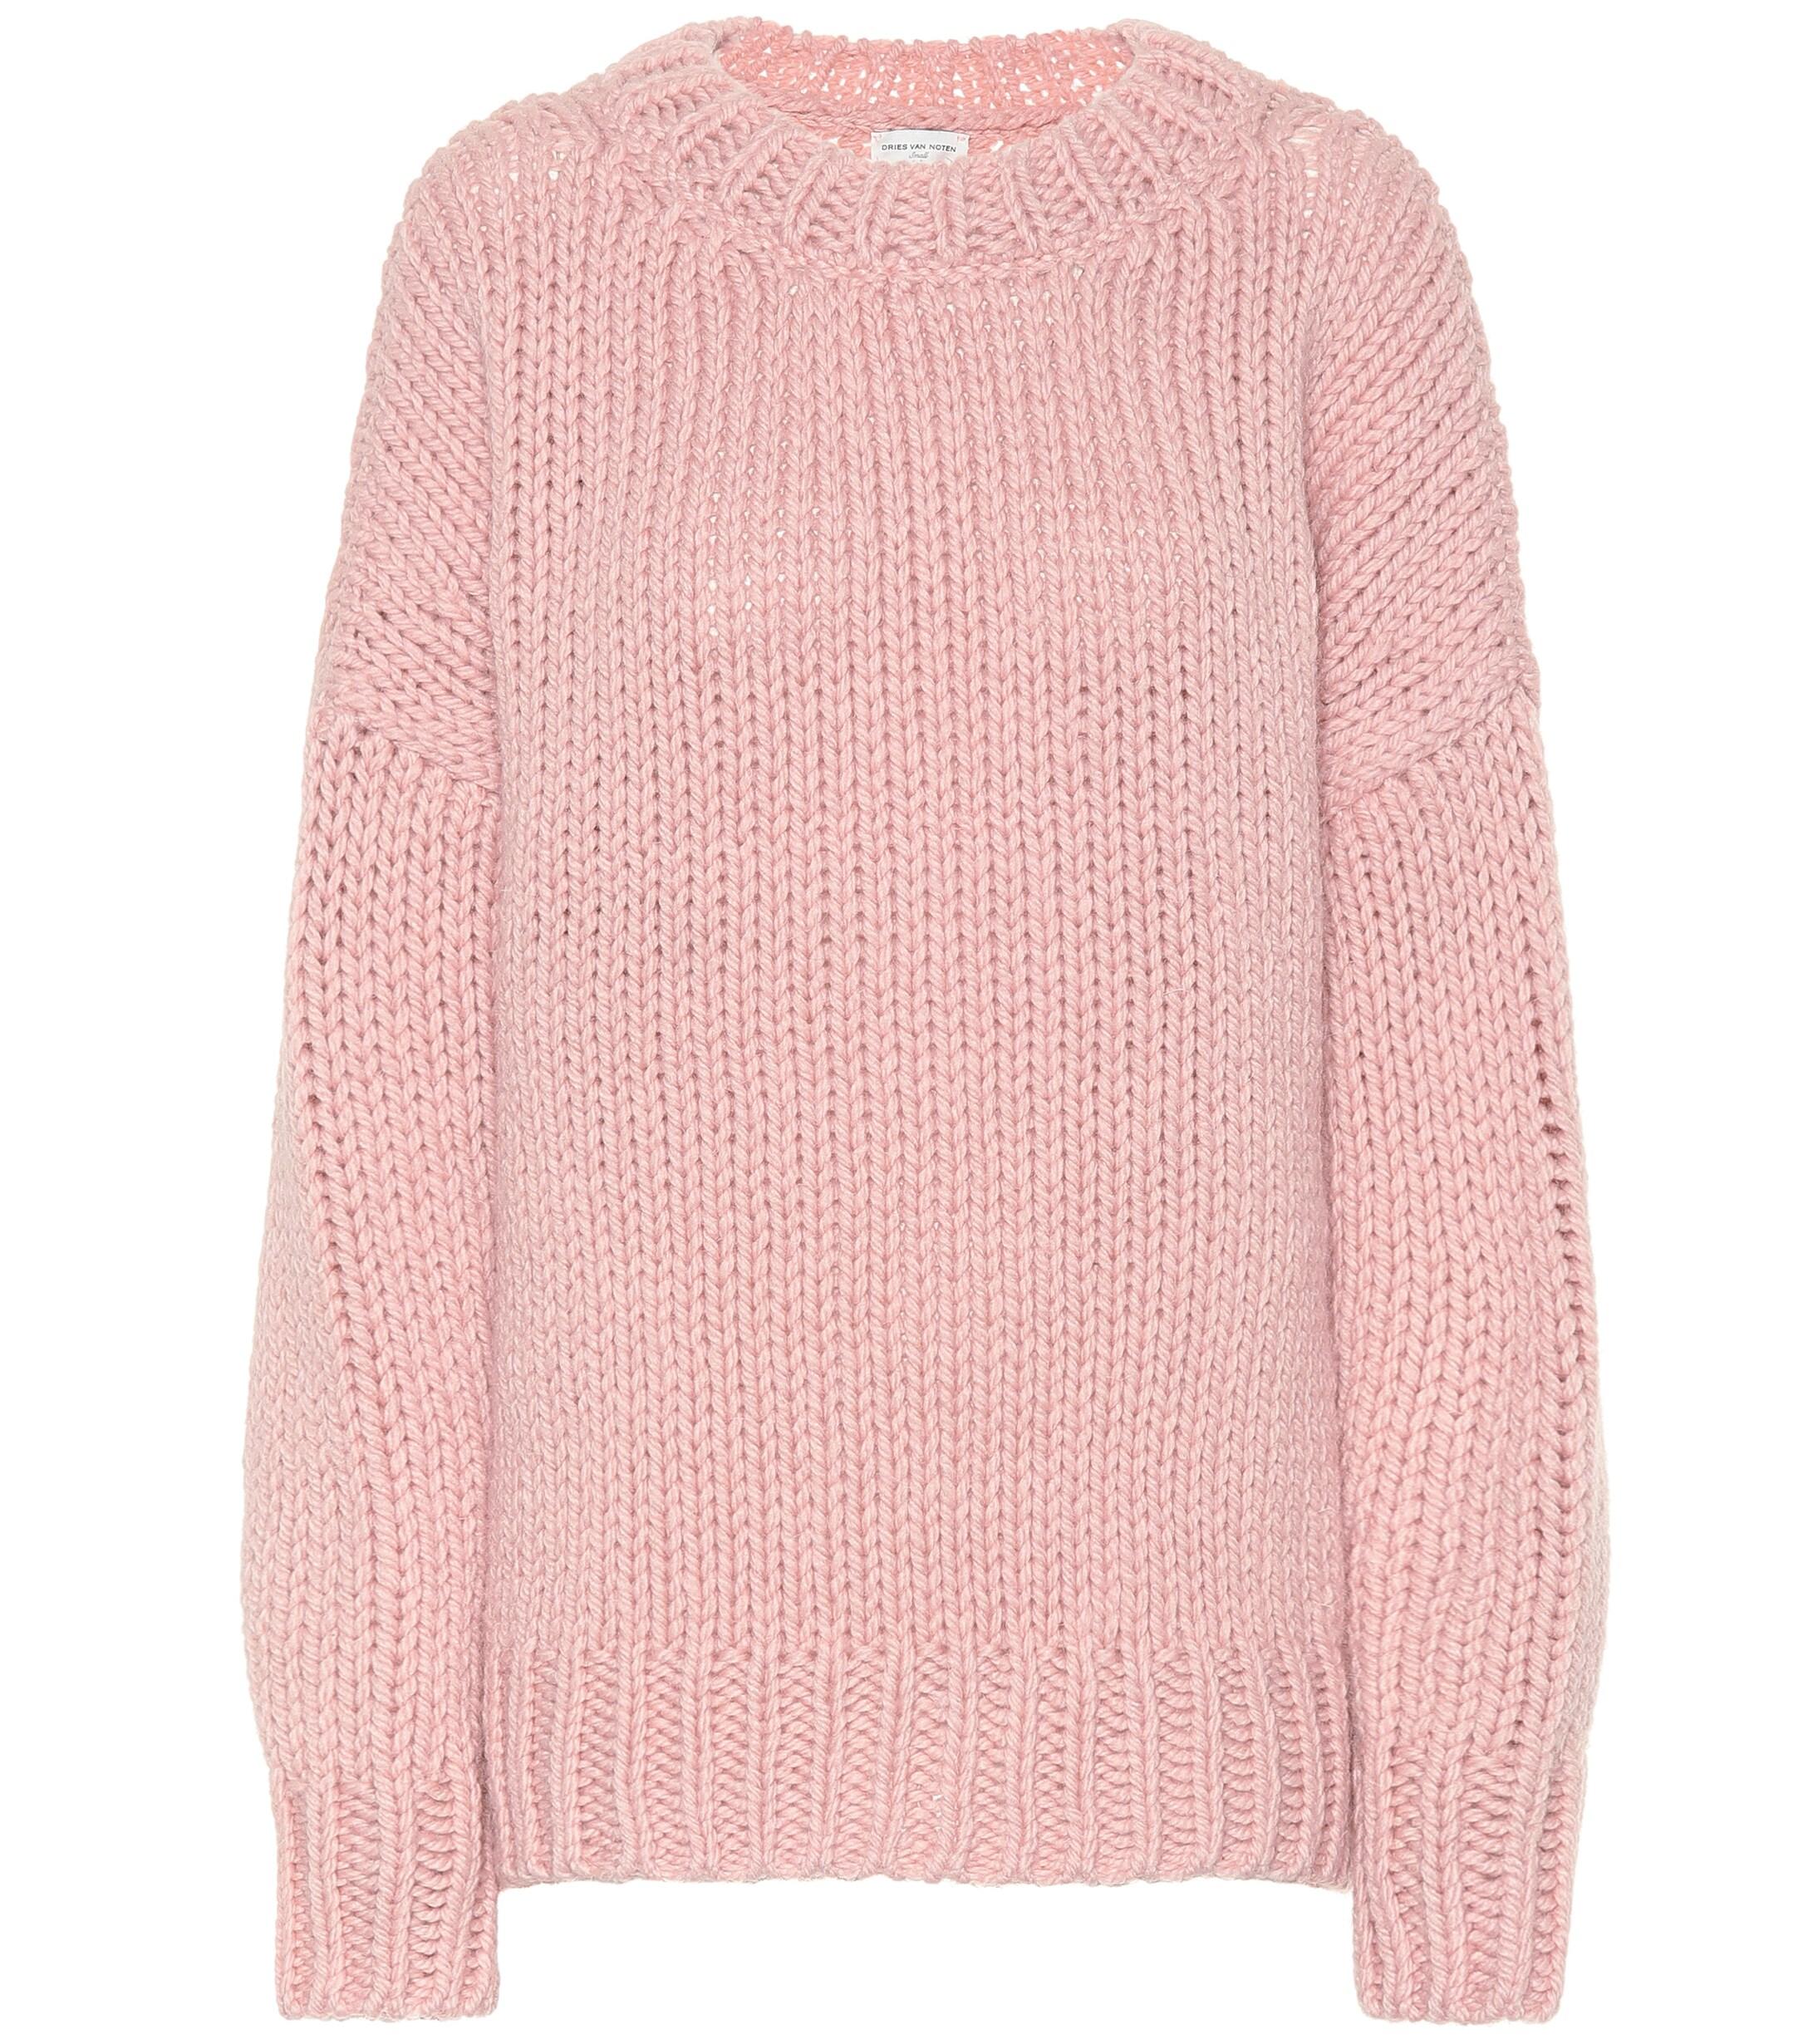 Dries Van Noten Wool And Mohair Sweater in Pink - Lyst